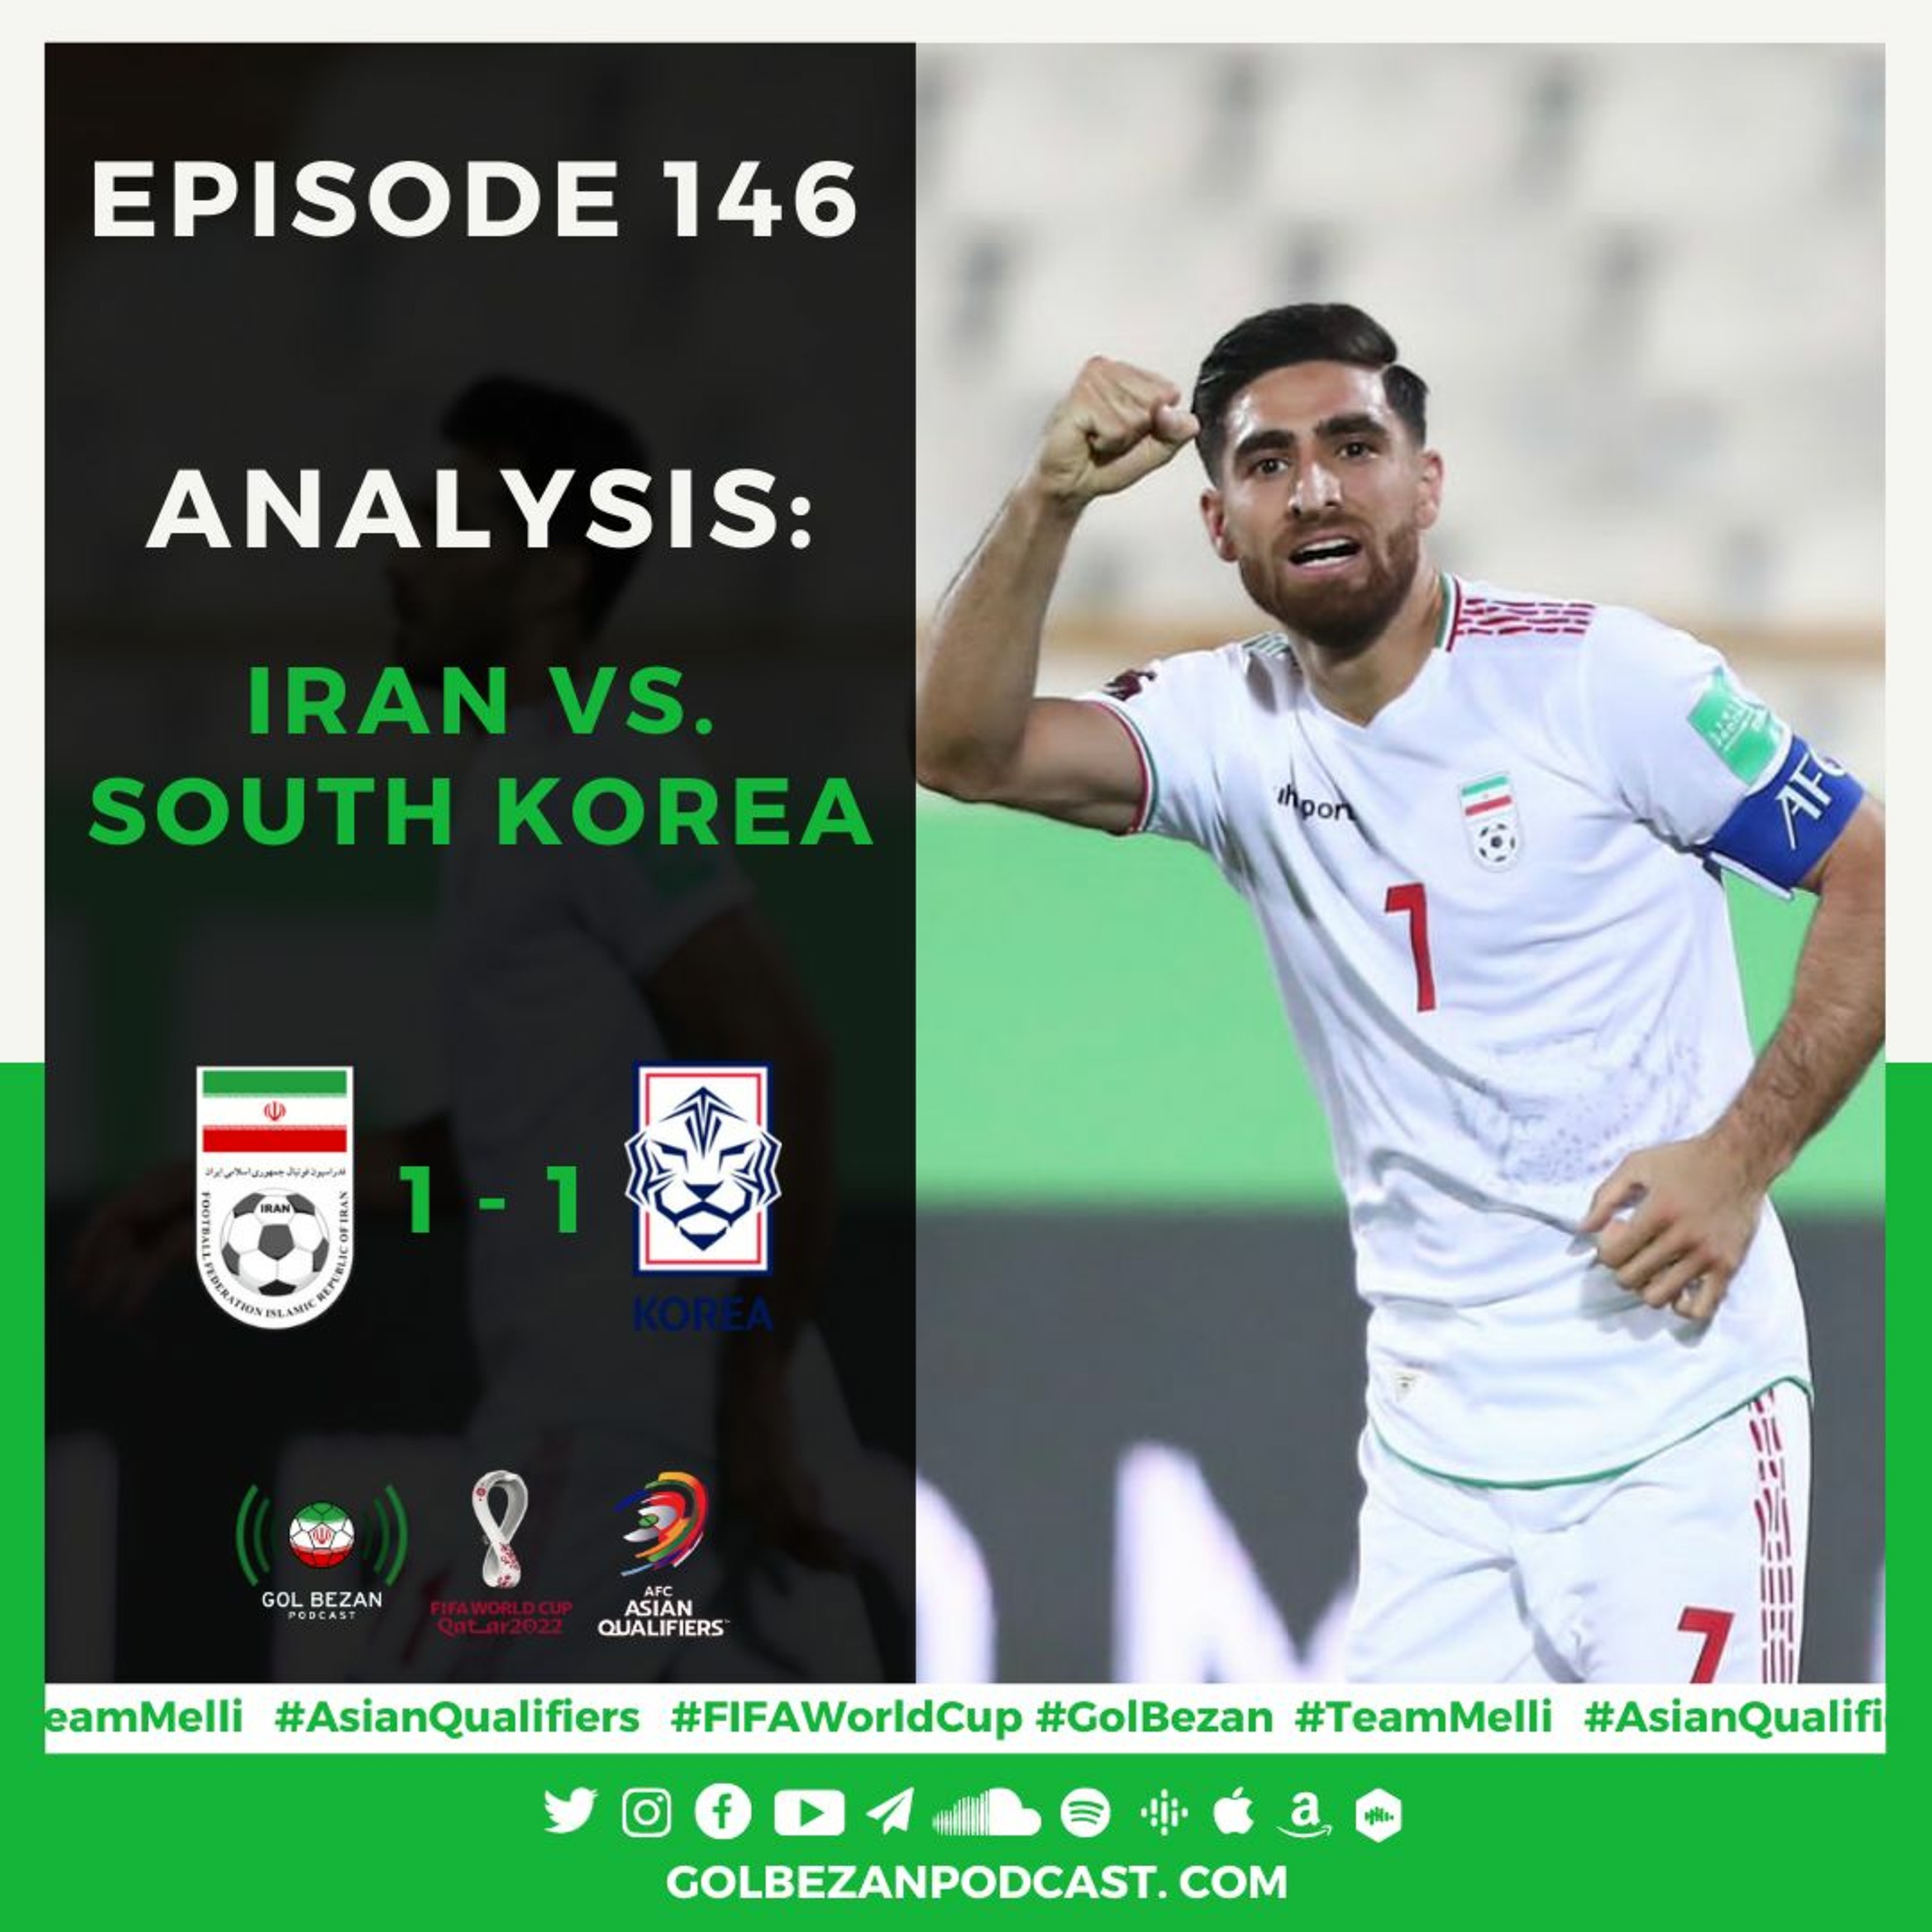 Analysis: Iran 1 - 1 South Korea | آنالیز ایران کره جنوبی